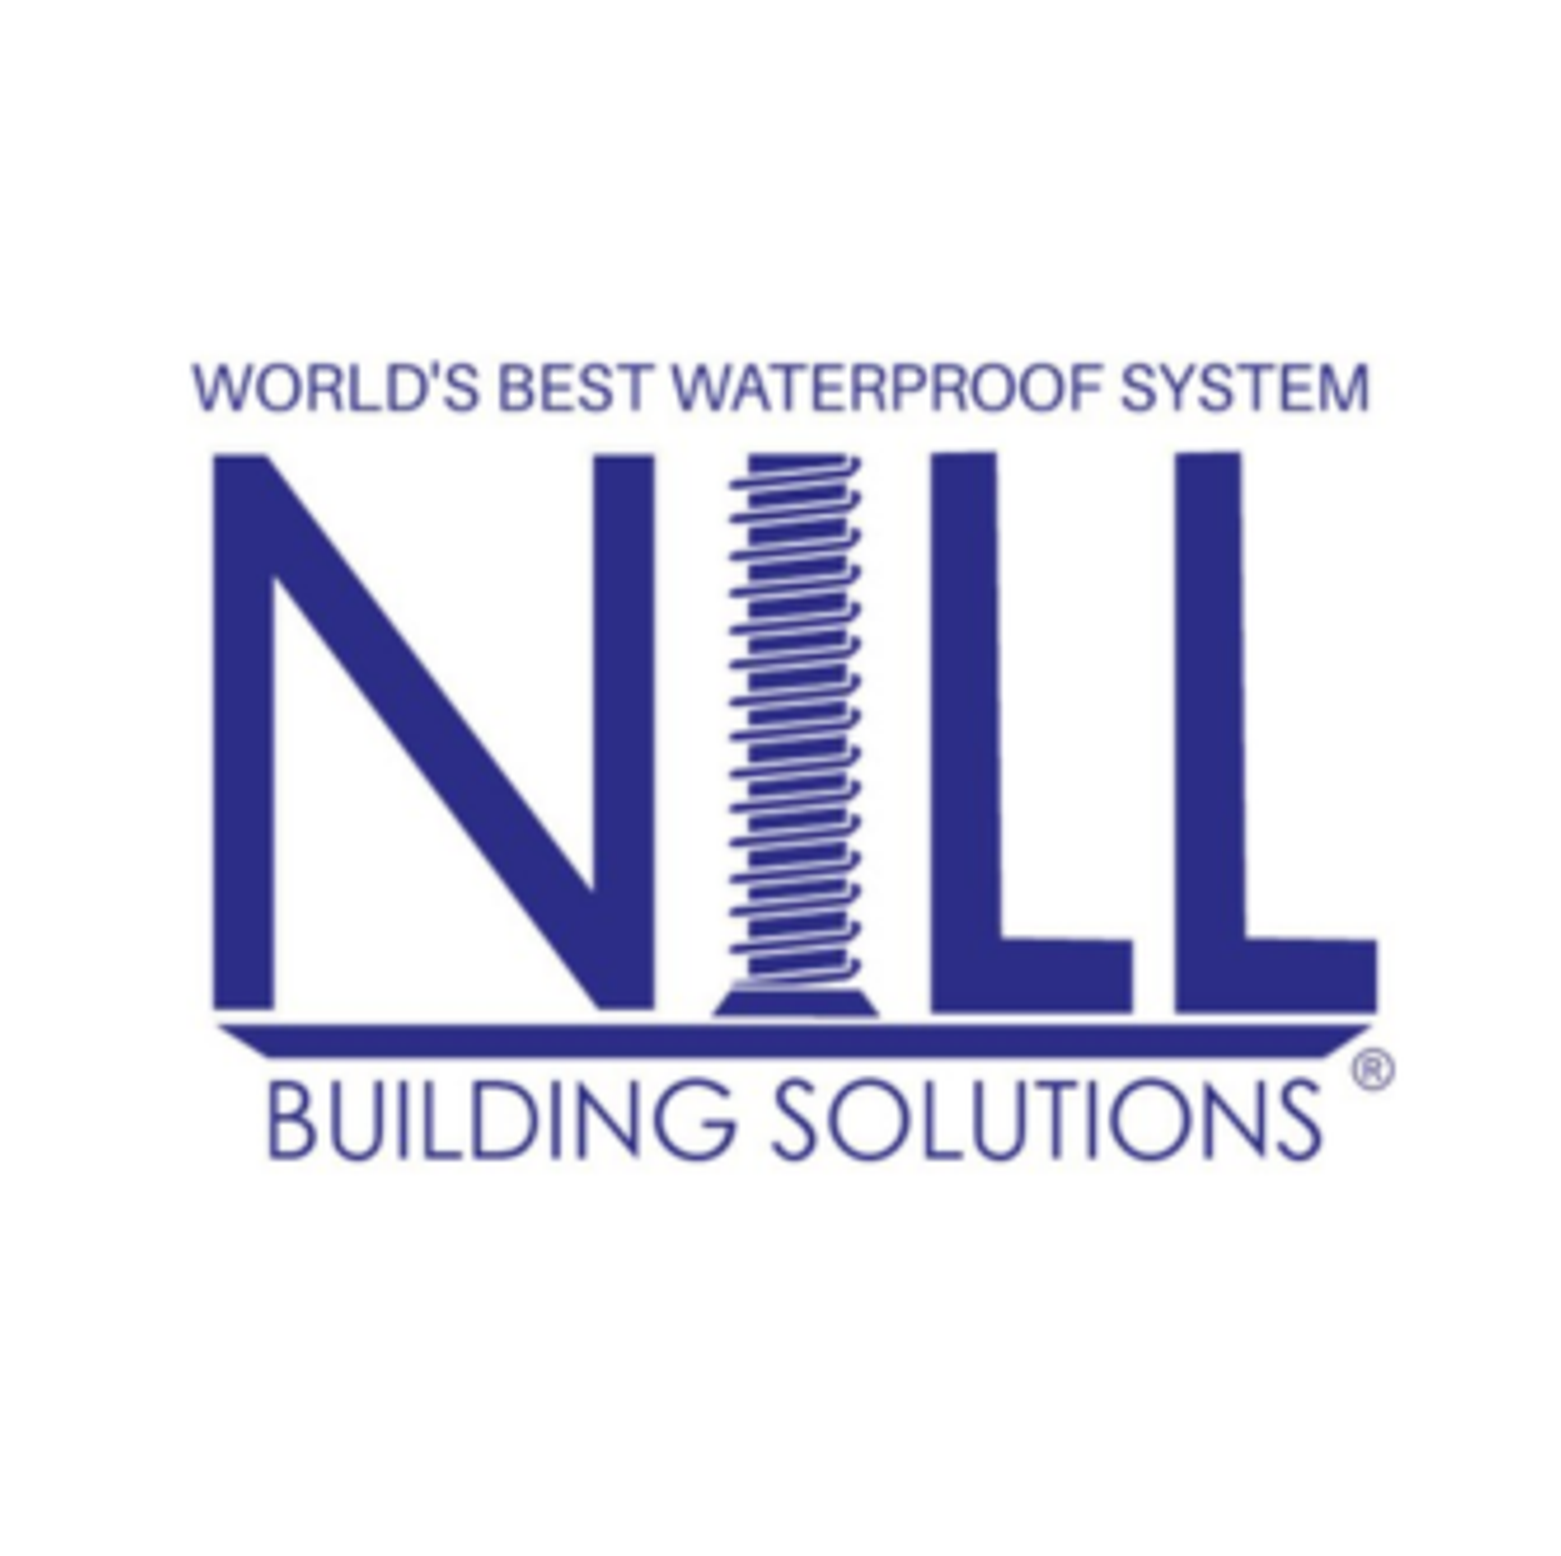 Nill Building Solutions